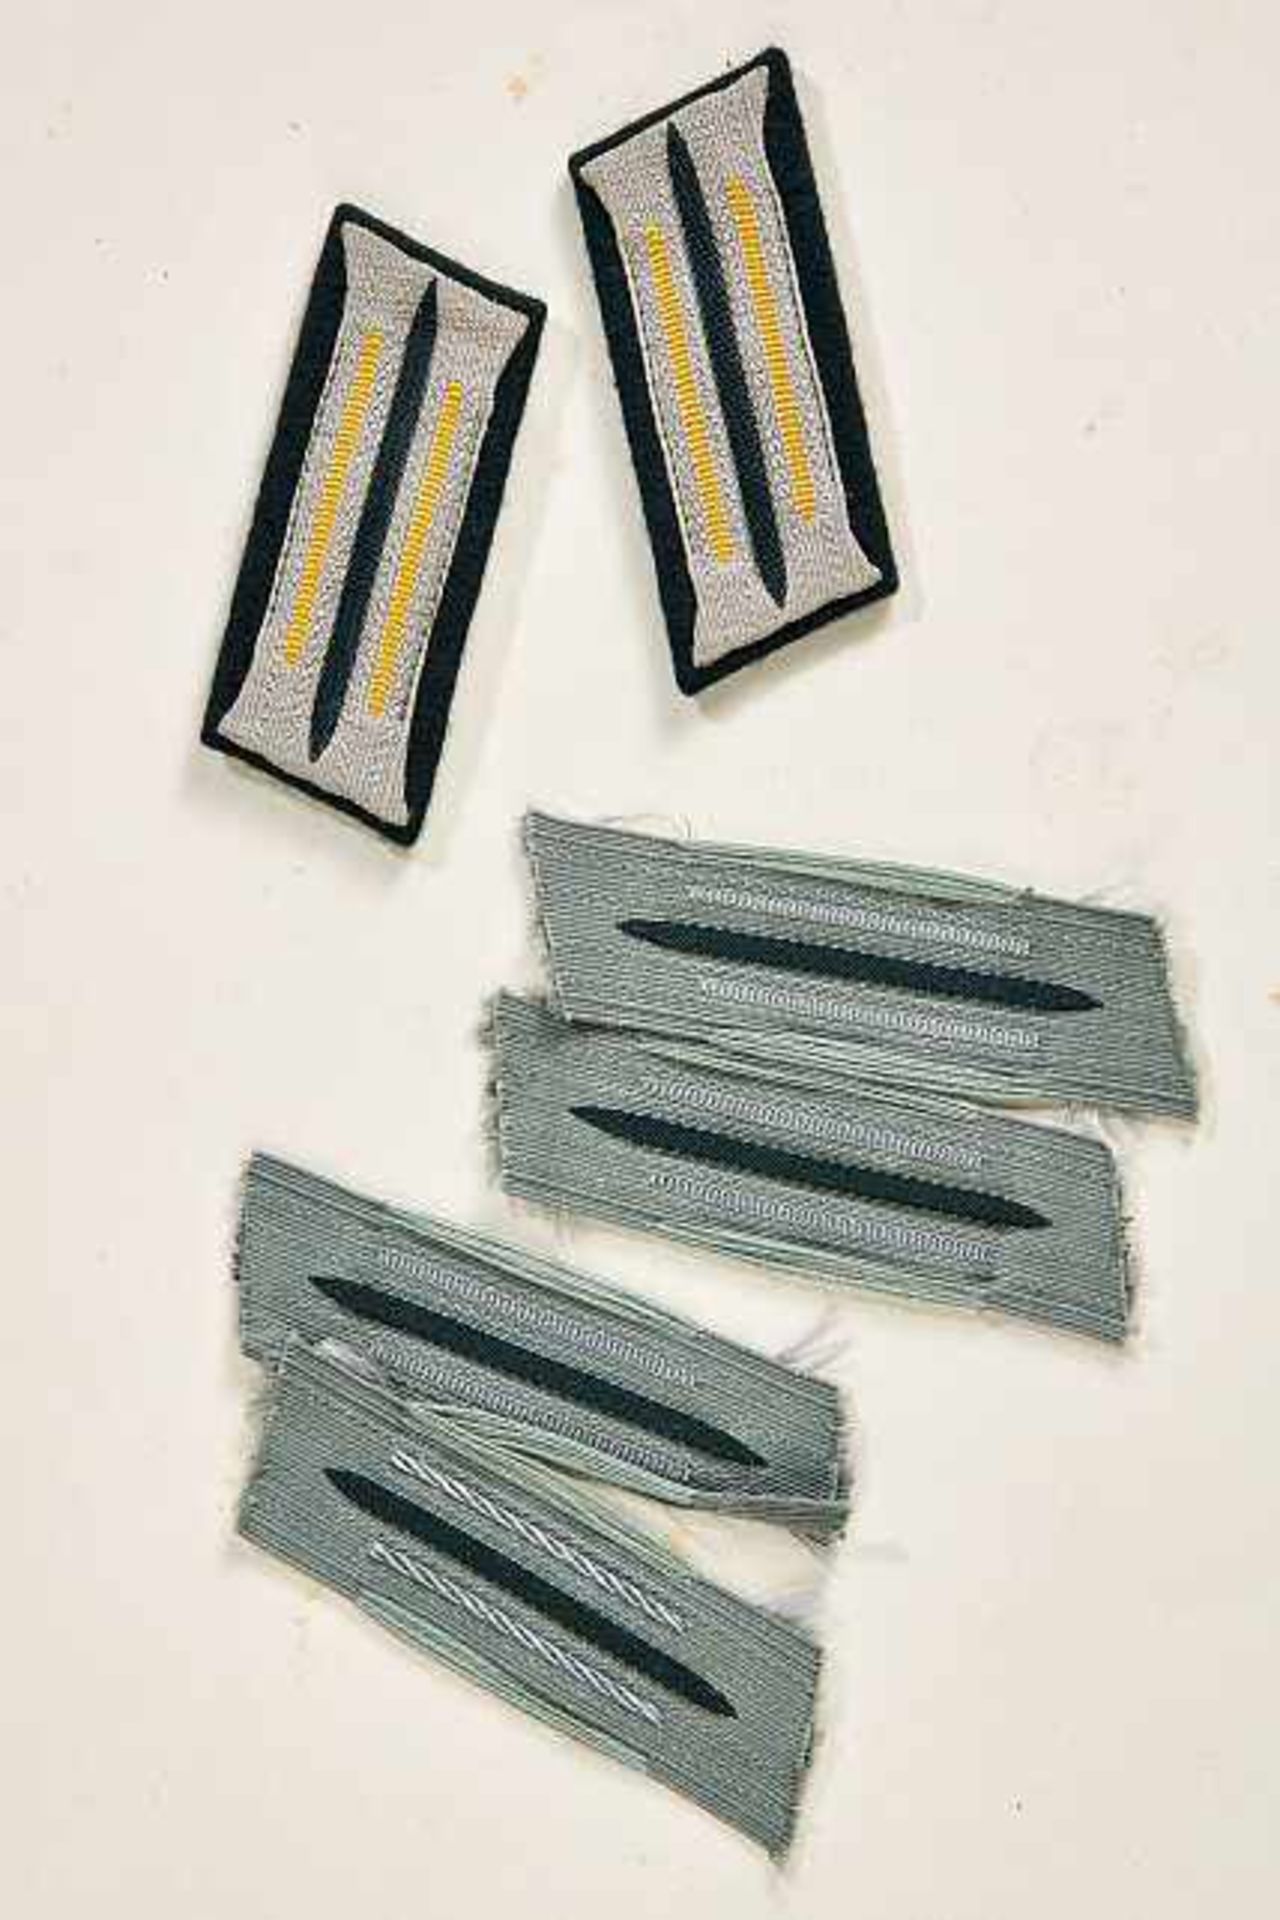 Deutsches Reich 1933 - 1945 - Heer - Uniformen : Army Enlisted Collar Rank Insignia.Collar rank